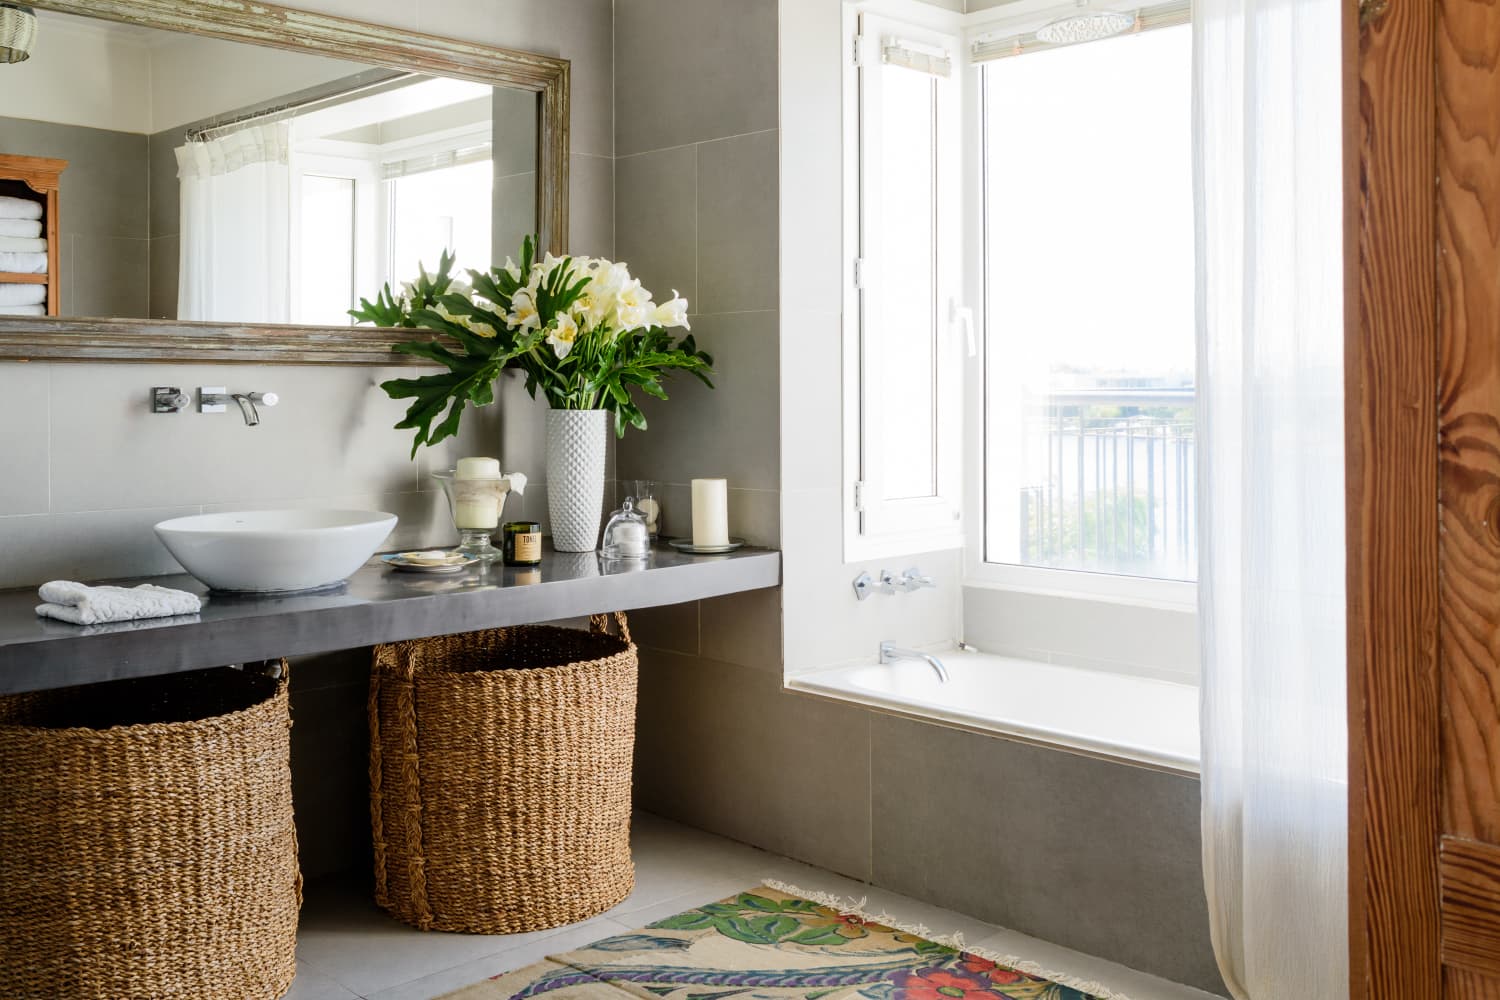 Prevent Water Spots on Shower Doors in DIY, Homemade Cleaners